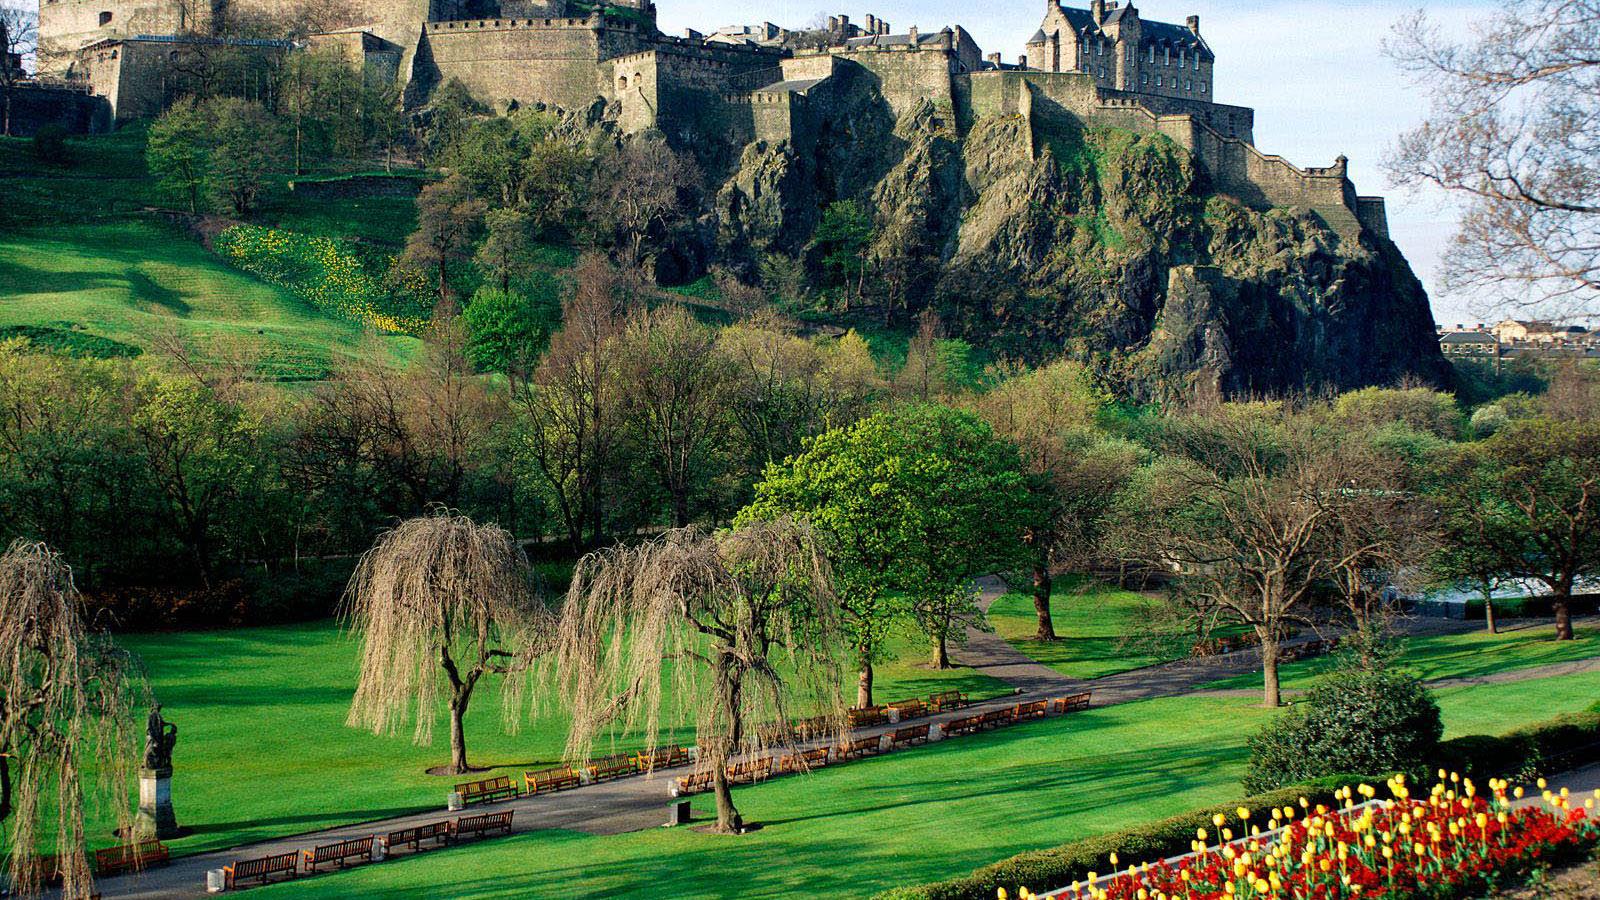 Wallpaper Edinburgh Castle Scotland X